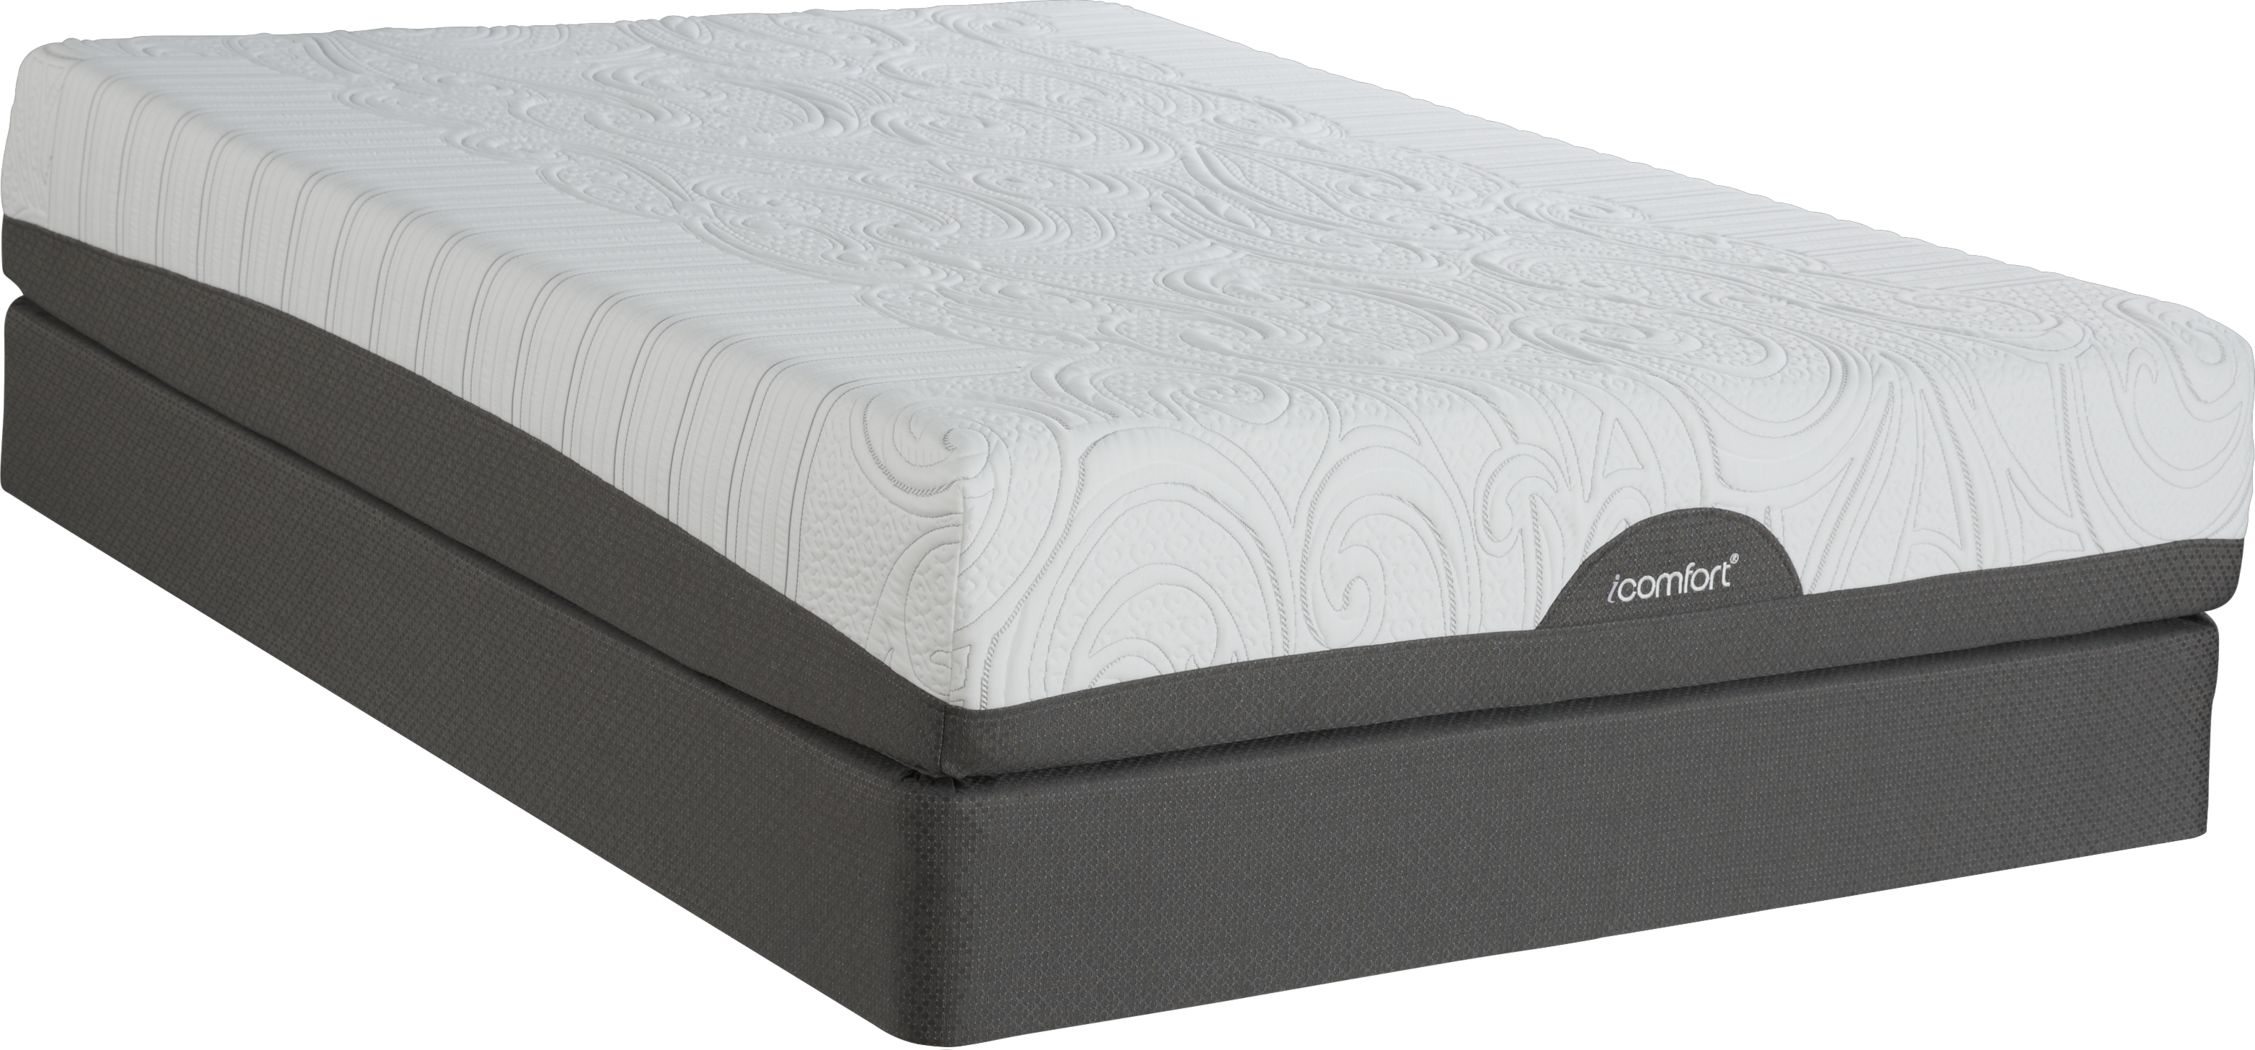 icomfort recognition extra firm queen mattress